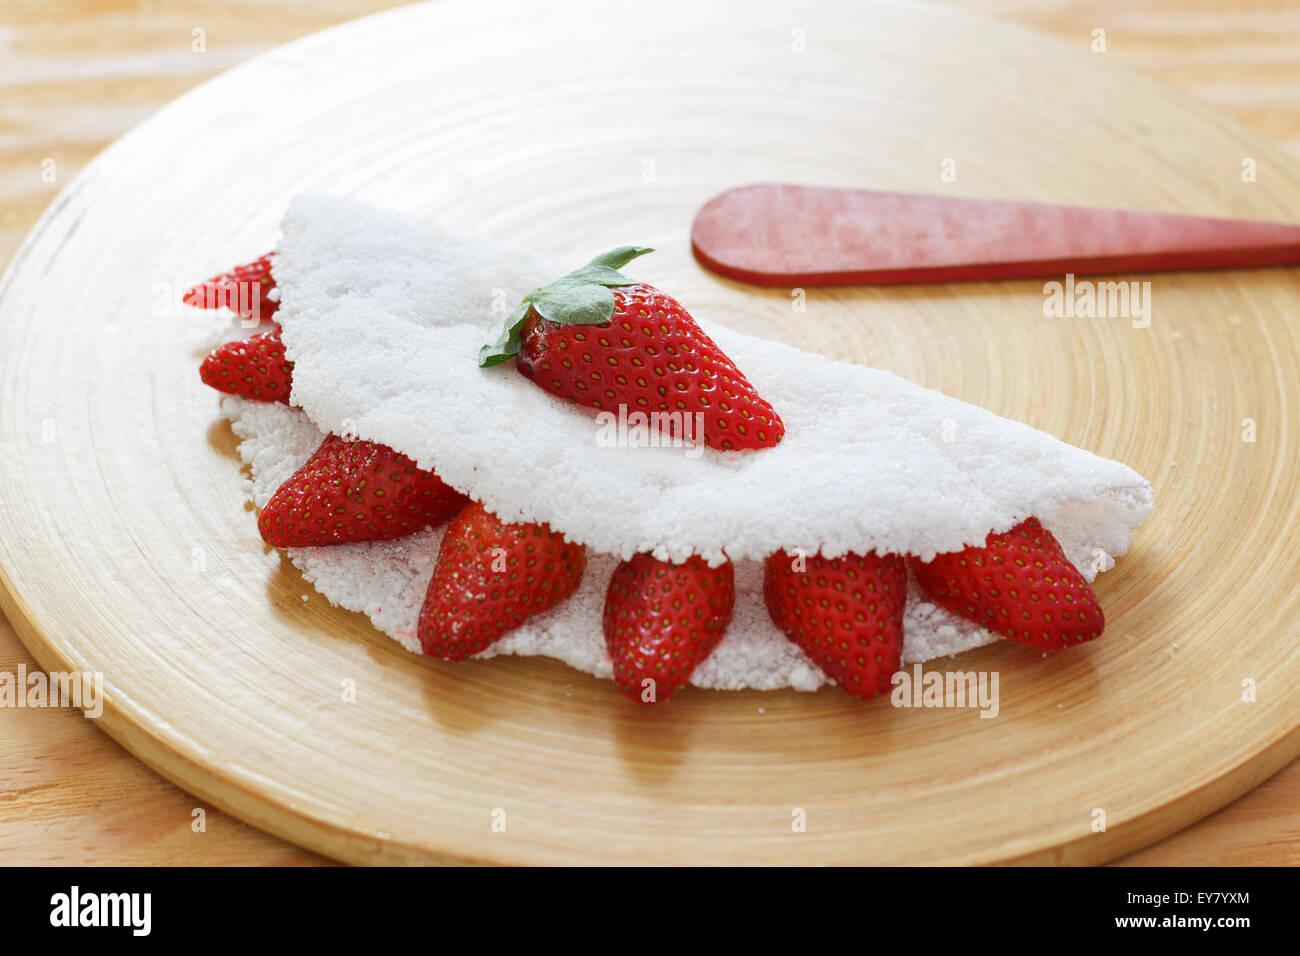 Casabe (bammy, beiju, bob, biju) - flatbread made from cassava (tapioca) with strawberry. Selective focus Stock Photo